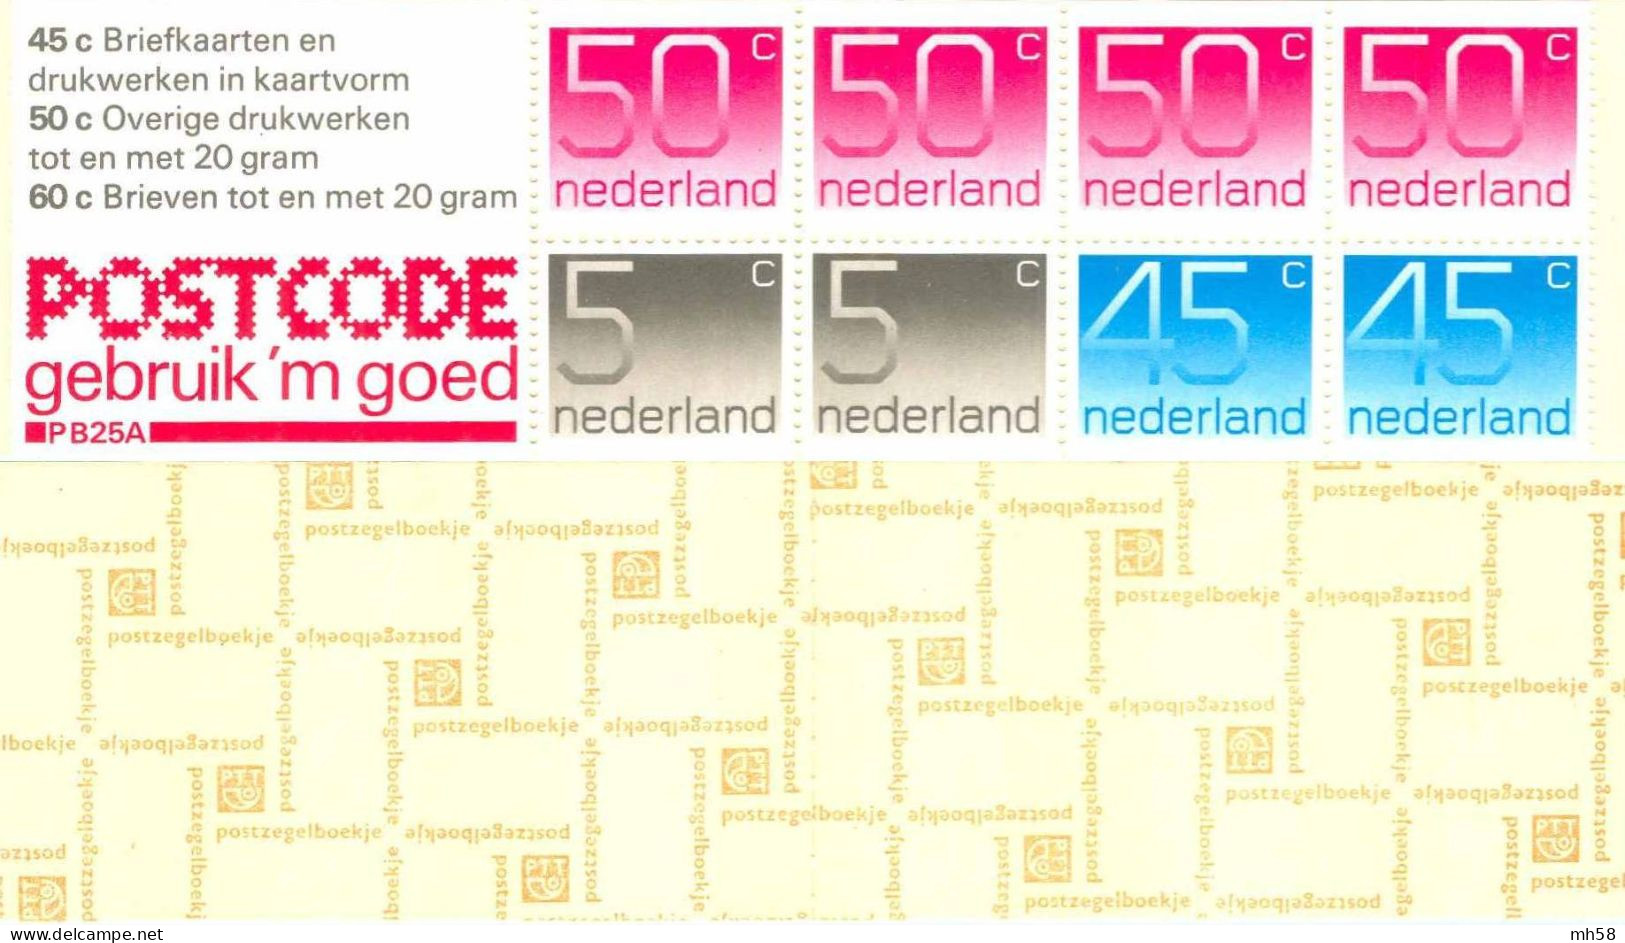 PAYS-BAS NEDERLAND 1980 - Carnet / Booklet / MH Indice PB25A - 3 G Chiffre - YT C 1104b / MI MH 26 - Carnets Et Roulettes